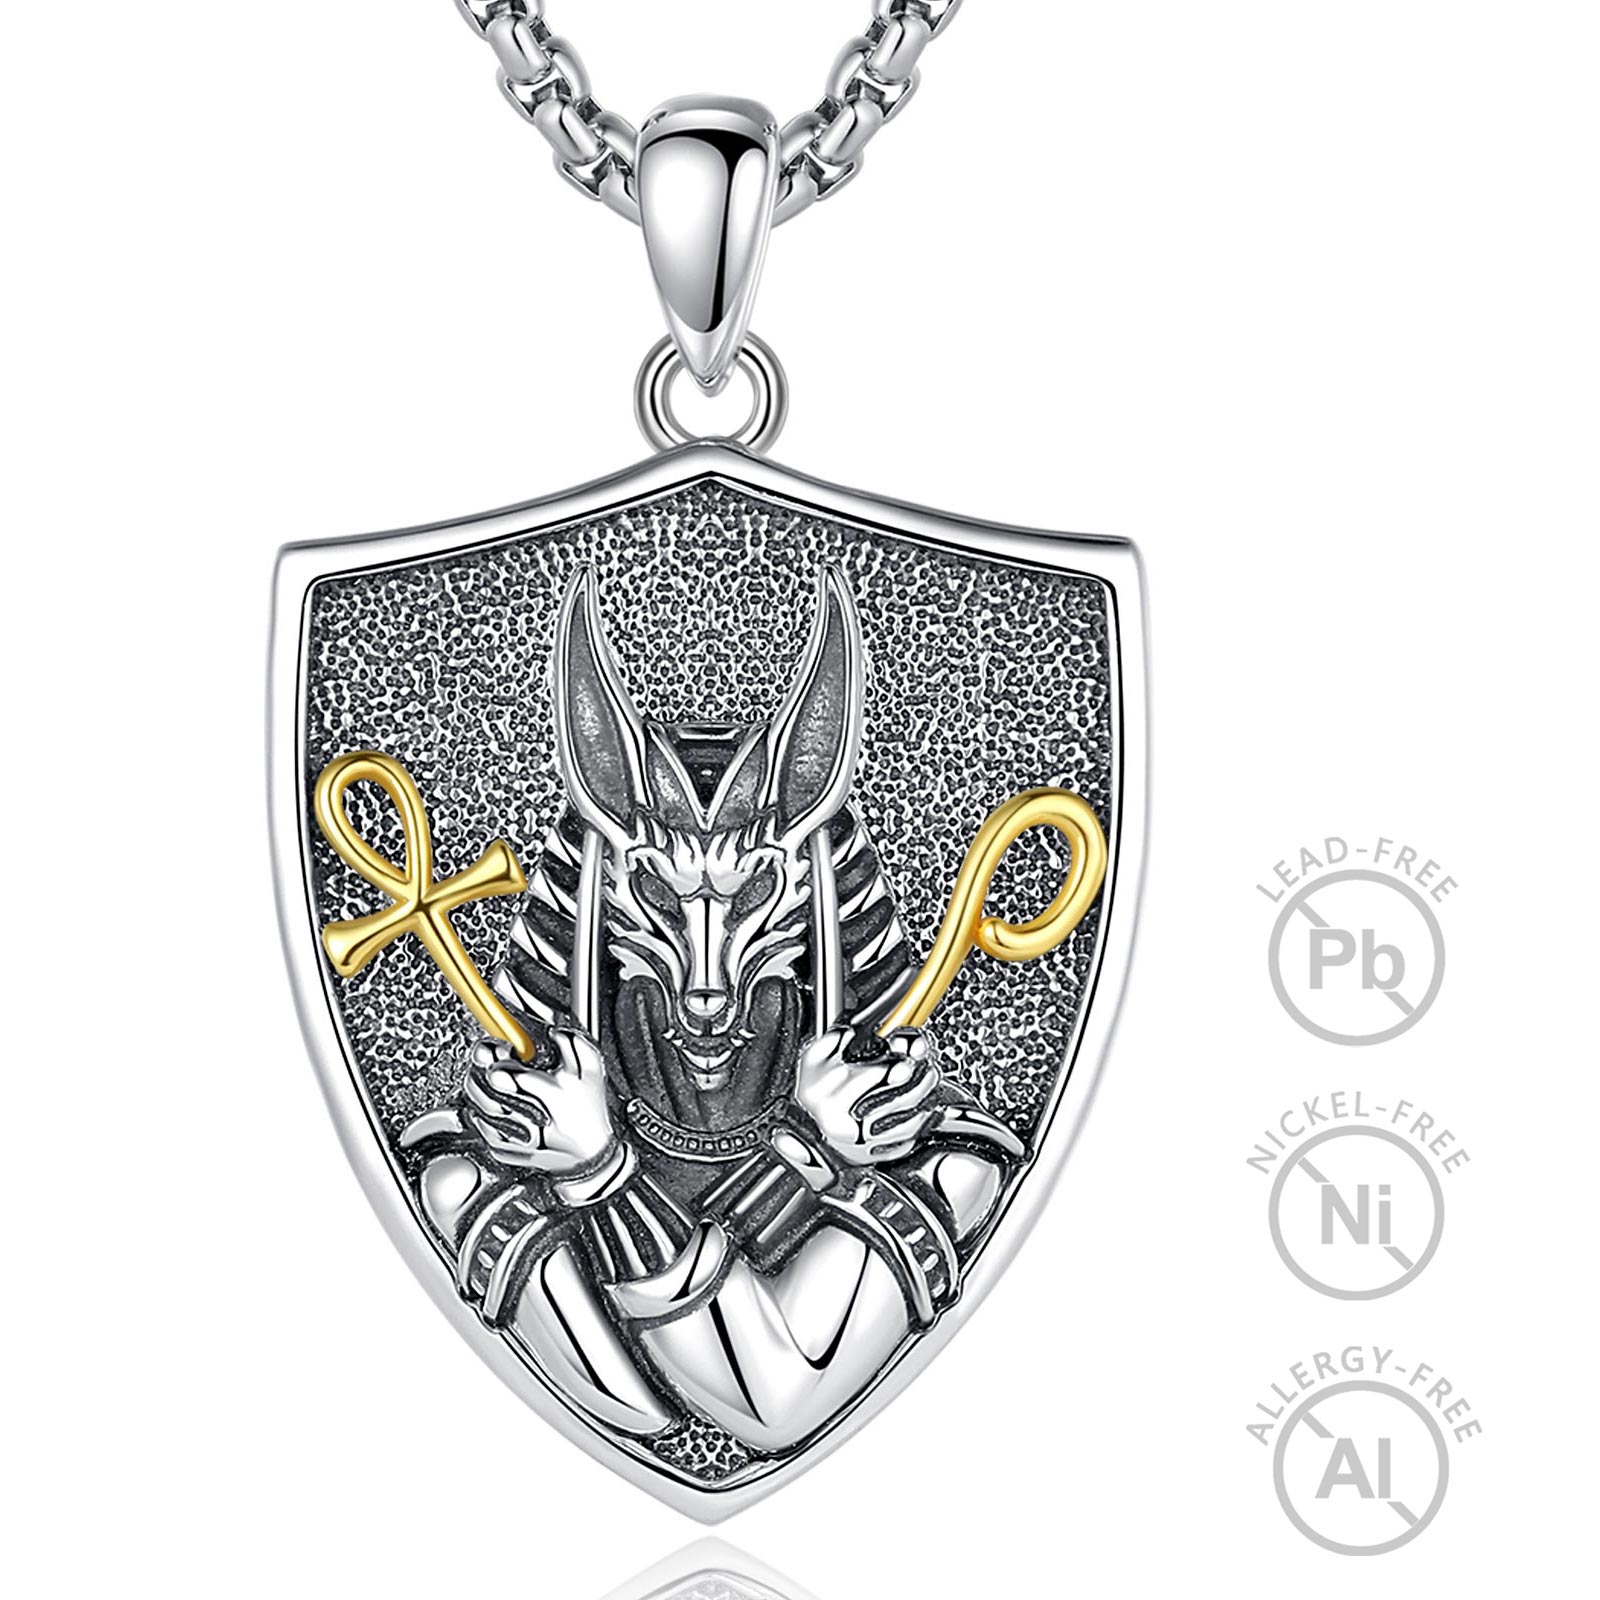 Merryshine Jewelry 925 Sterling Silver Egypt Patron Saint Anubis Amulet Pendant Necklace for Men